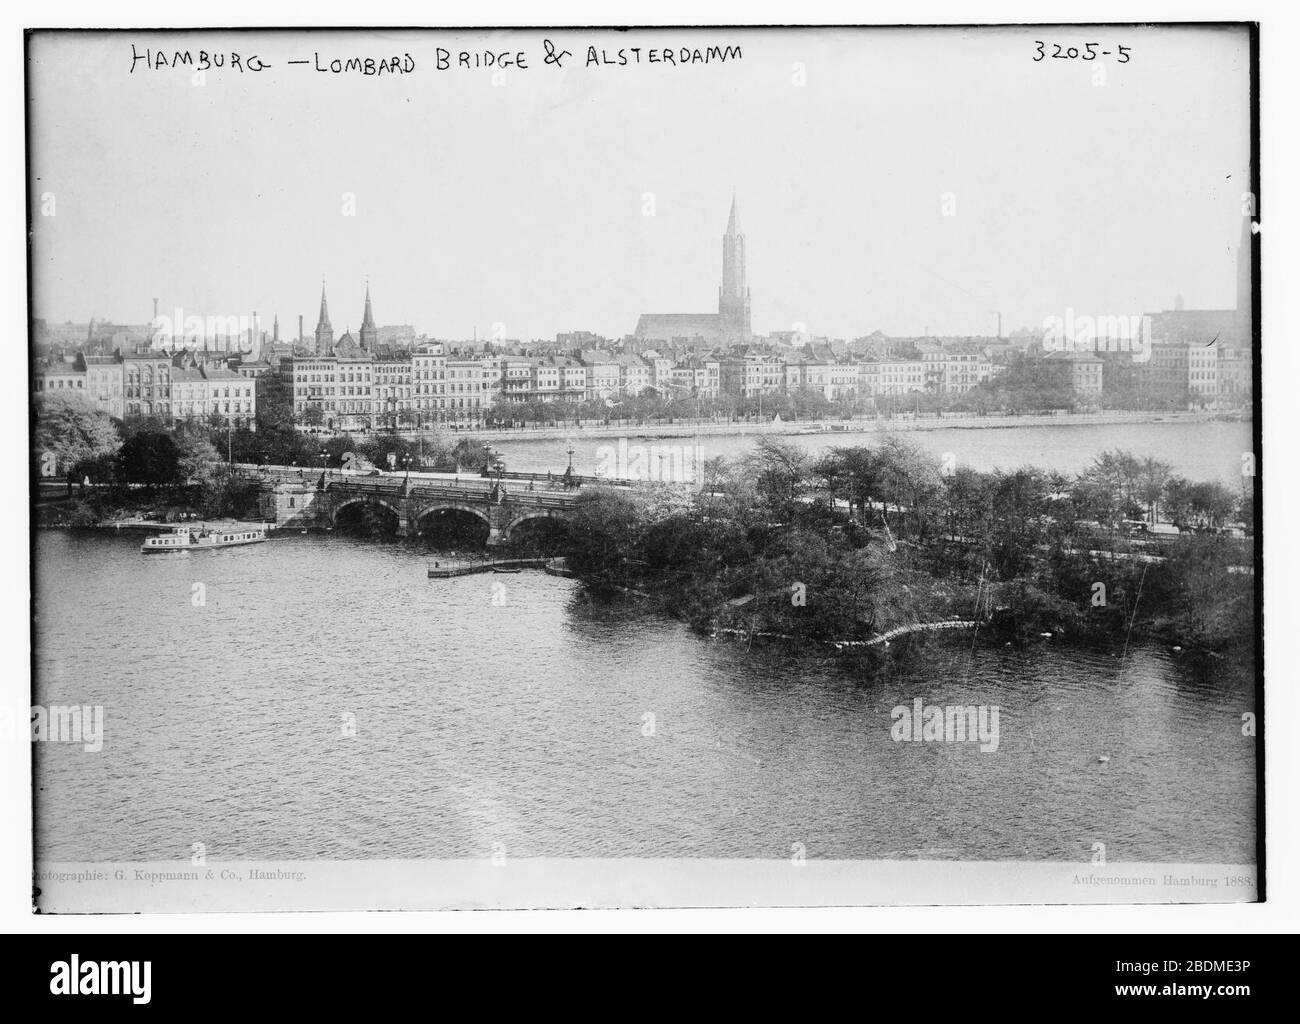 Hambourg - Pont Lombard et Alsterdamm Banque D'Images